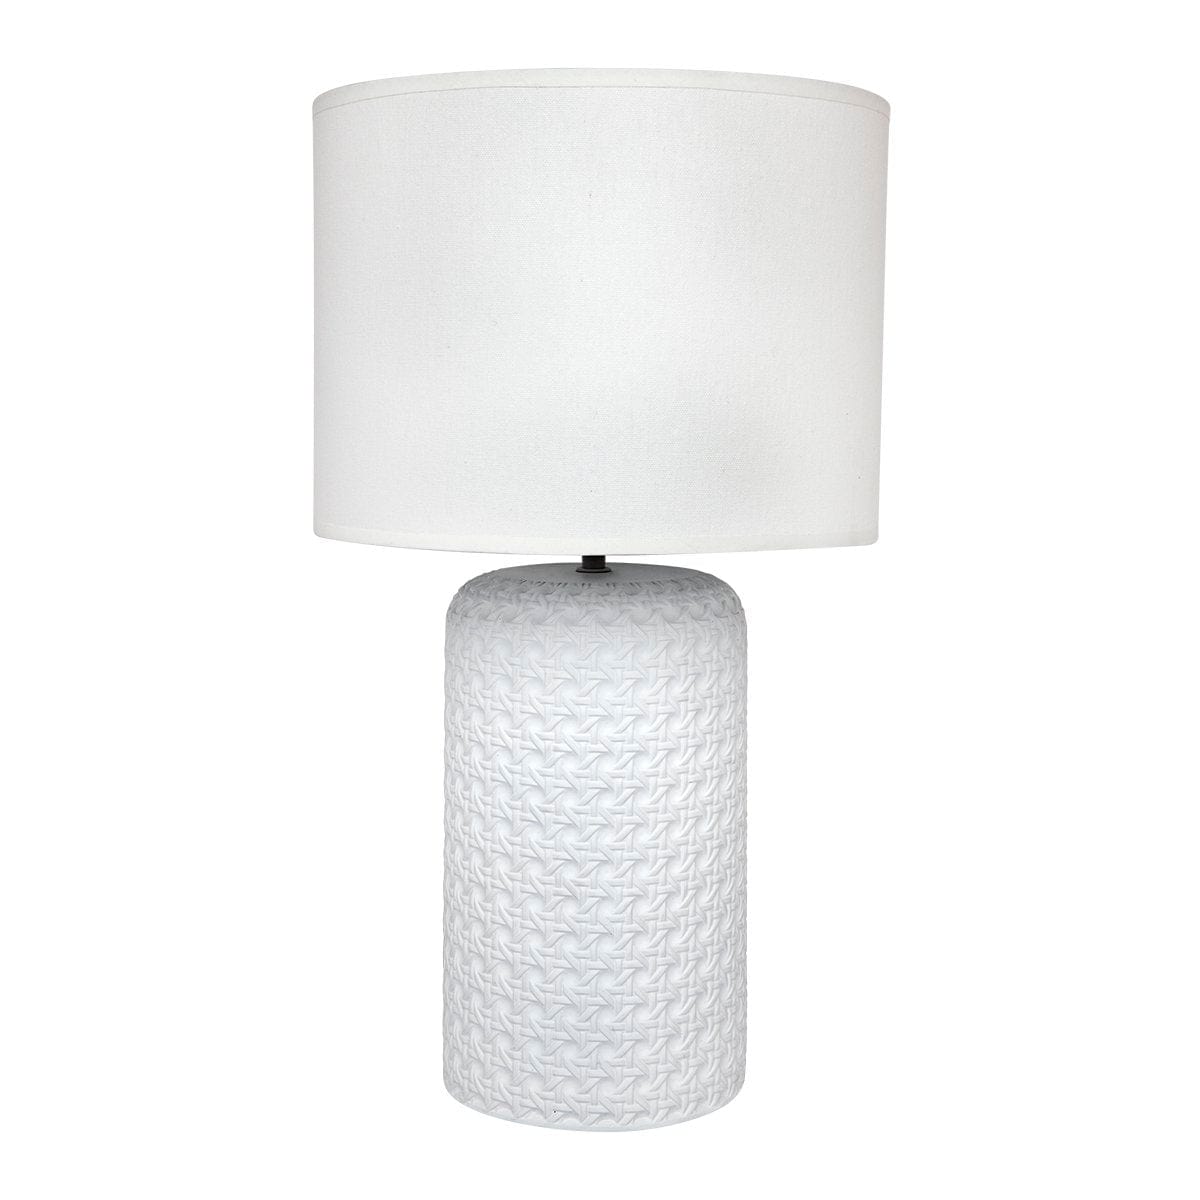 CAFE LIGHTING & LIVING Table Lamp Patronga Table Lamp - White 13311